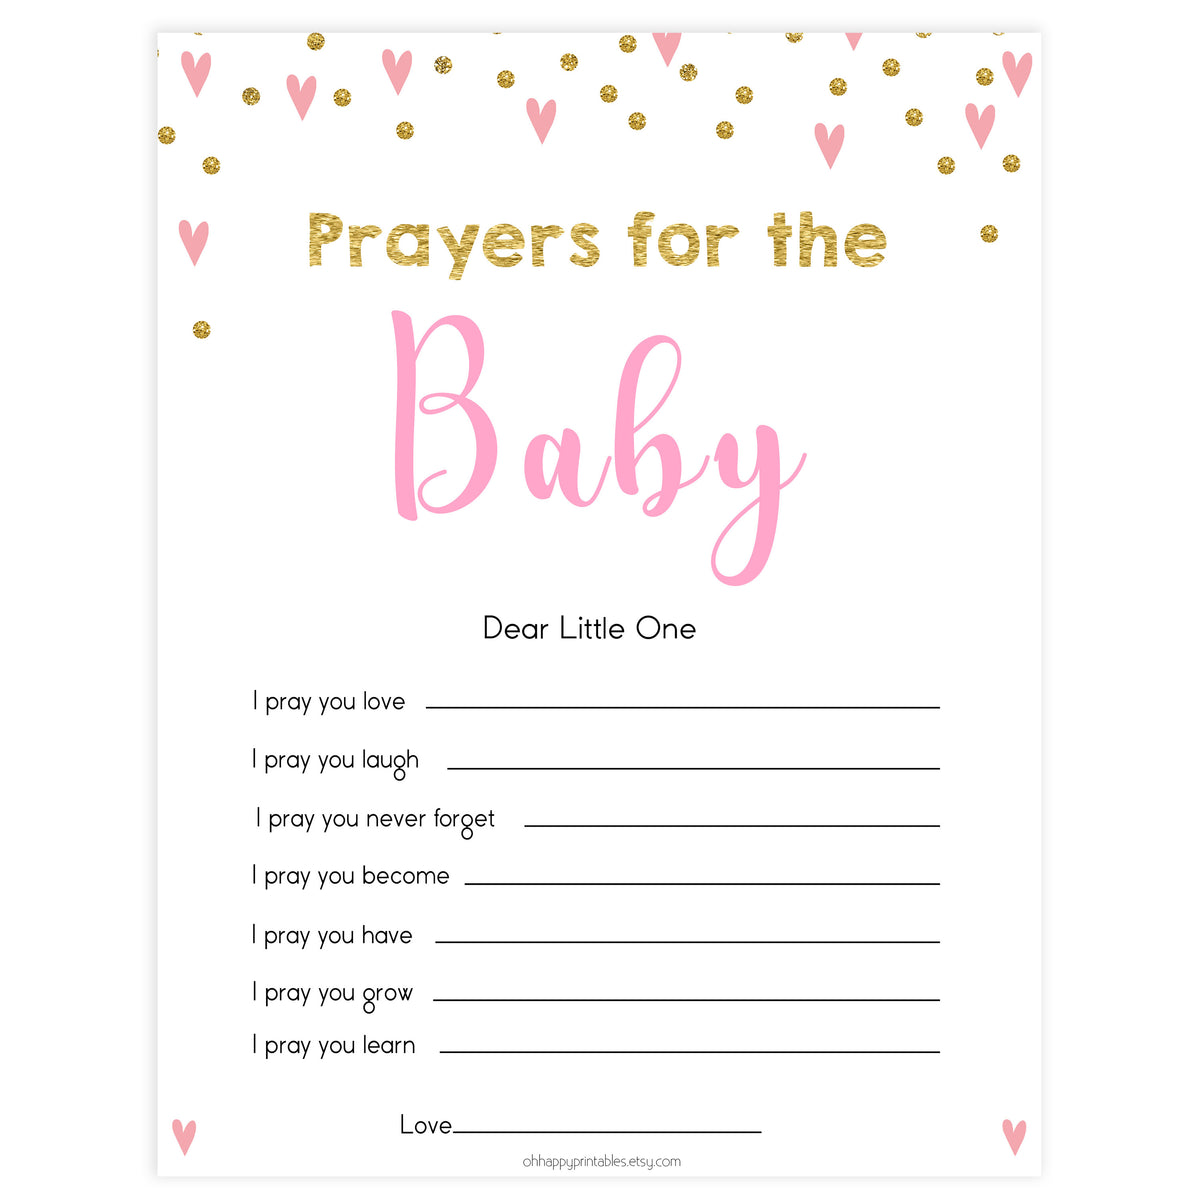 prayers for baby keepsake, popular baby shower games, free baby shower games, printable baby shower games, pink baby games, fun baby games